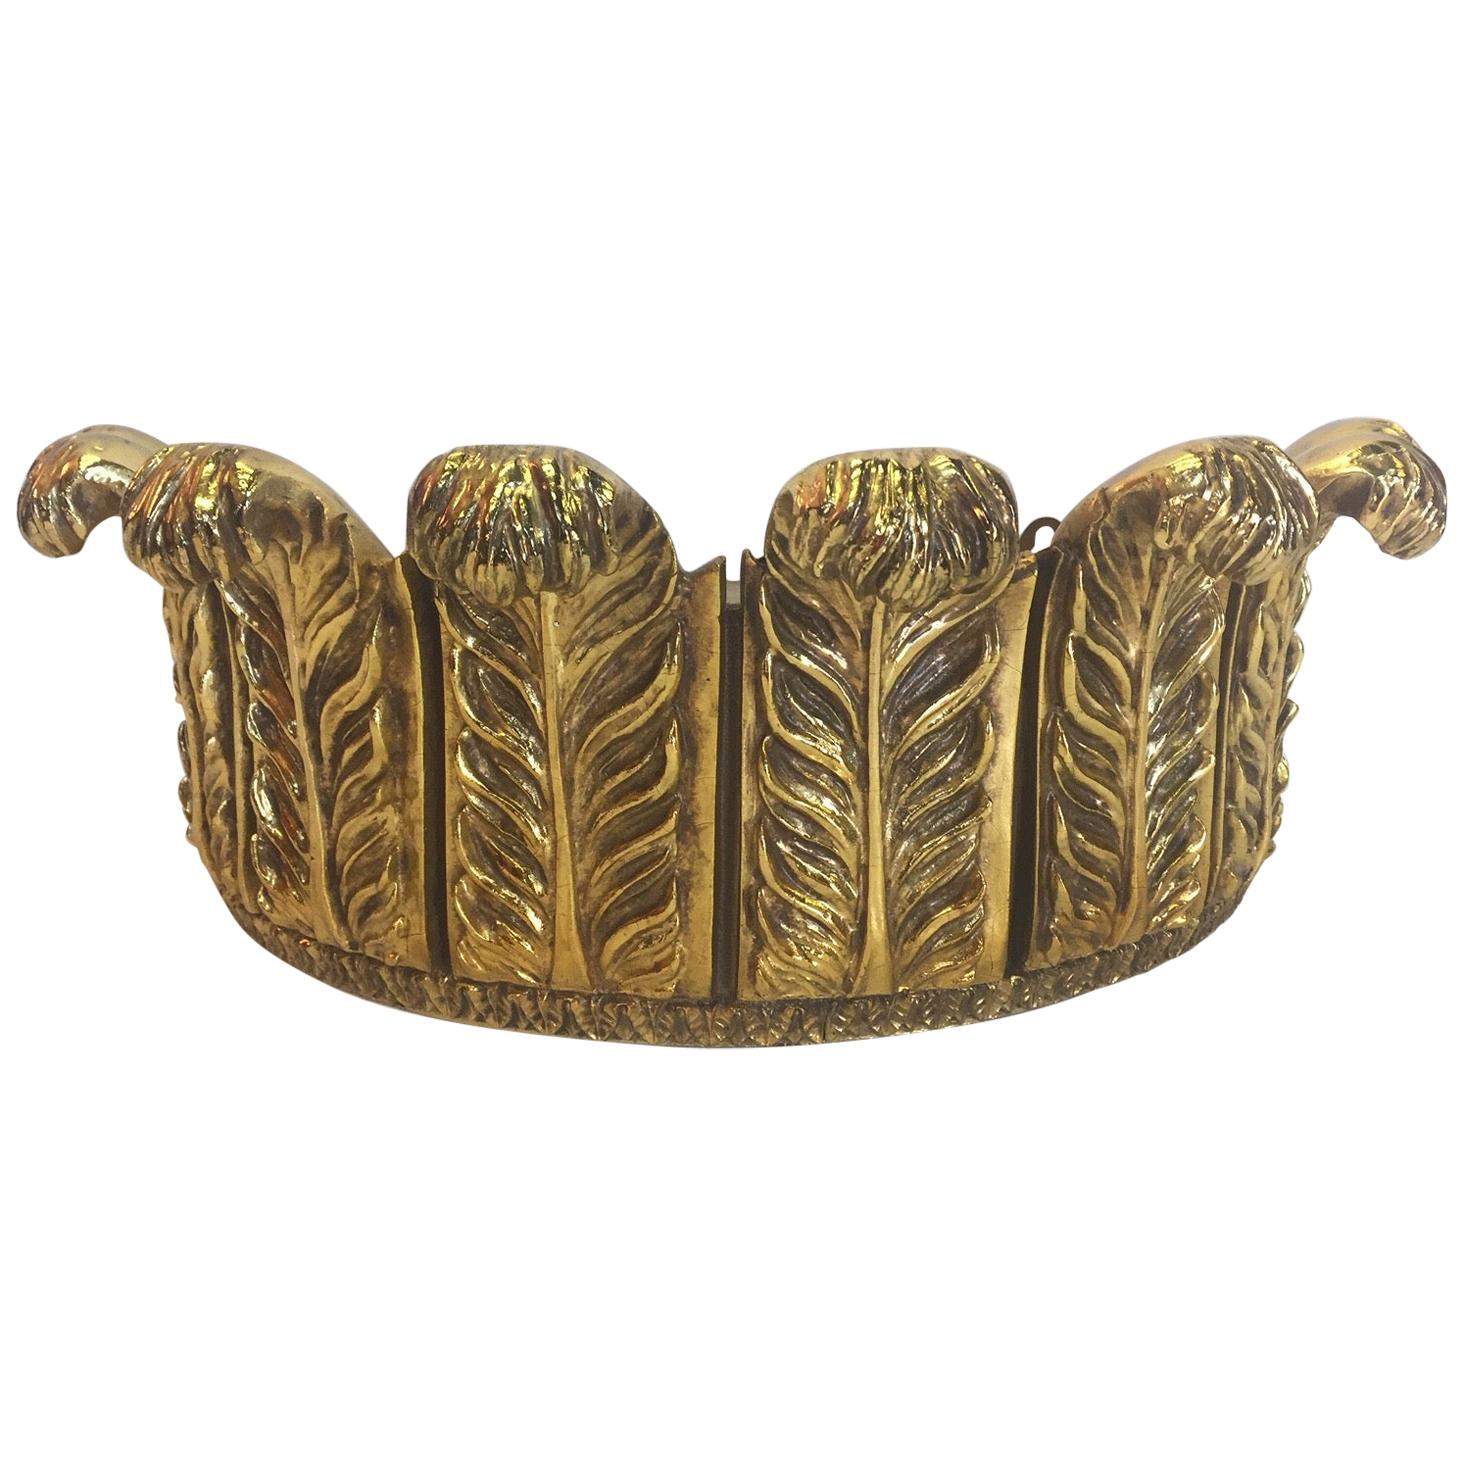 Glamorous Gilded Crown Corona Bed Wall Ornament